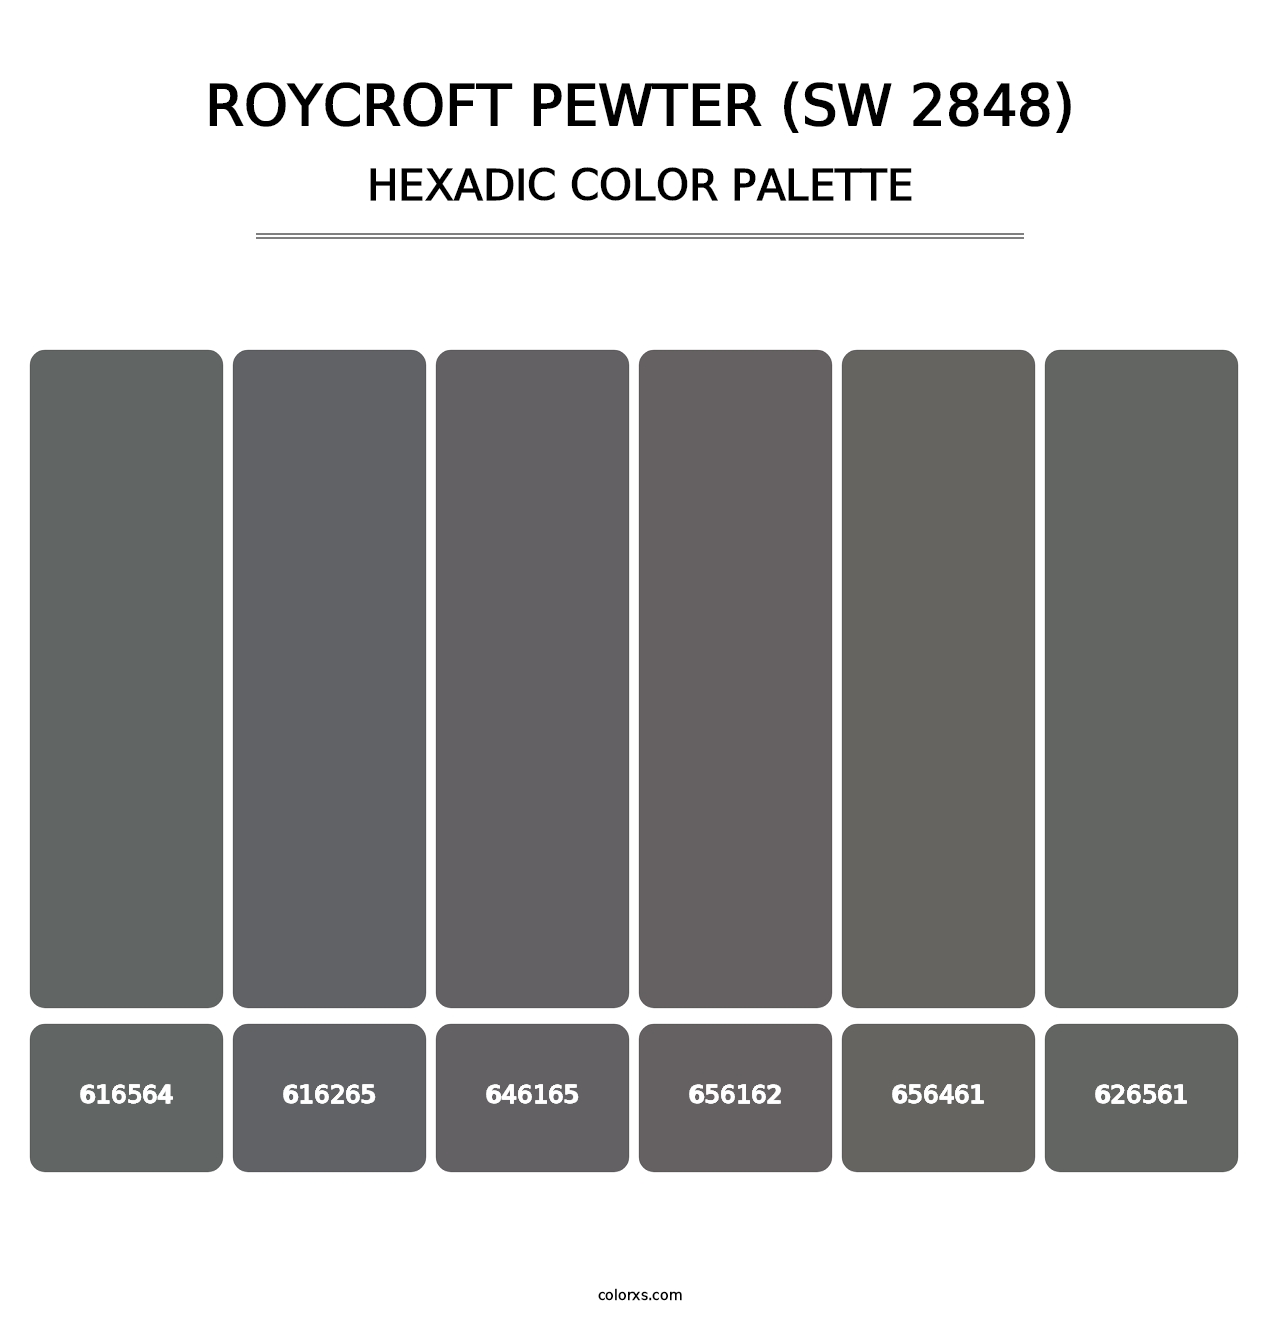 Roycroft Pewter (SW 2848) - Hexadic Color Palette